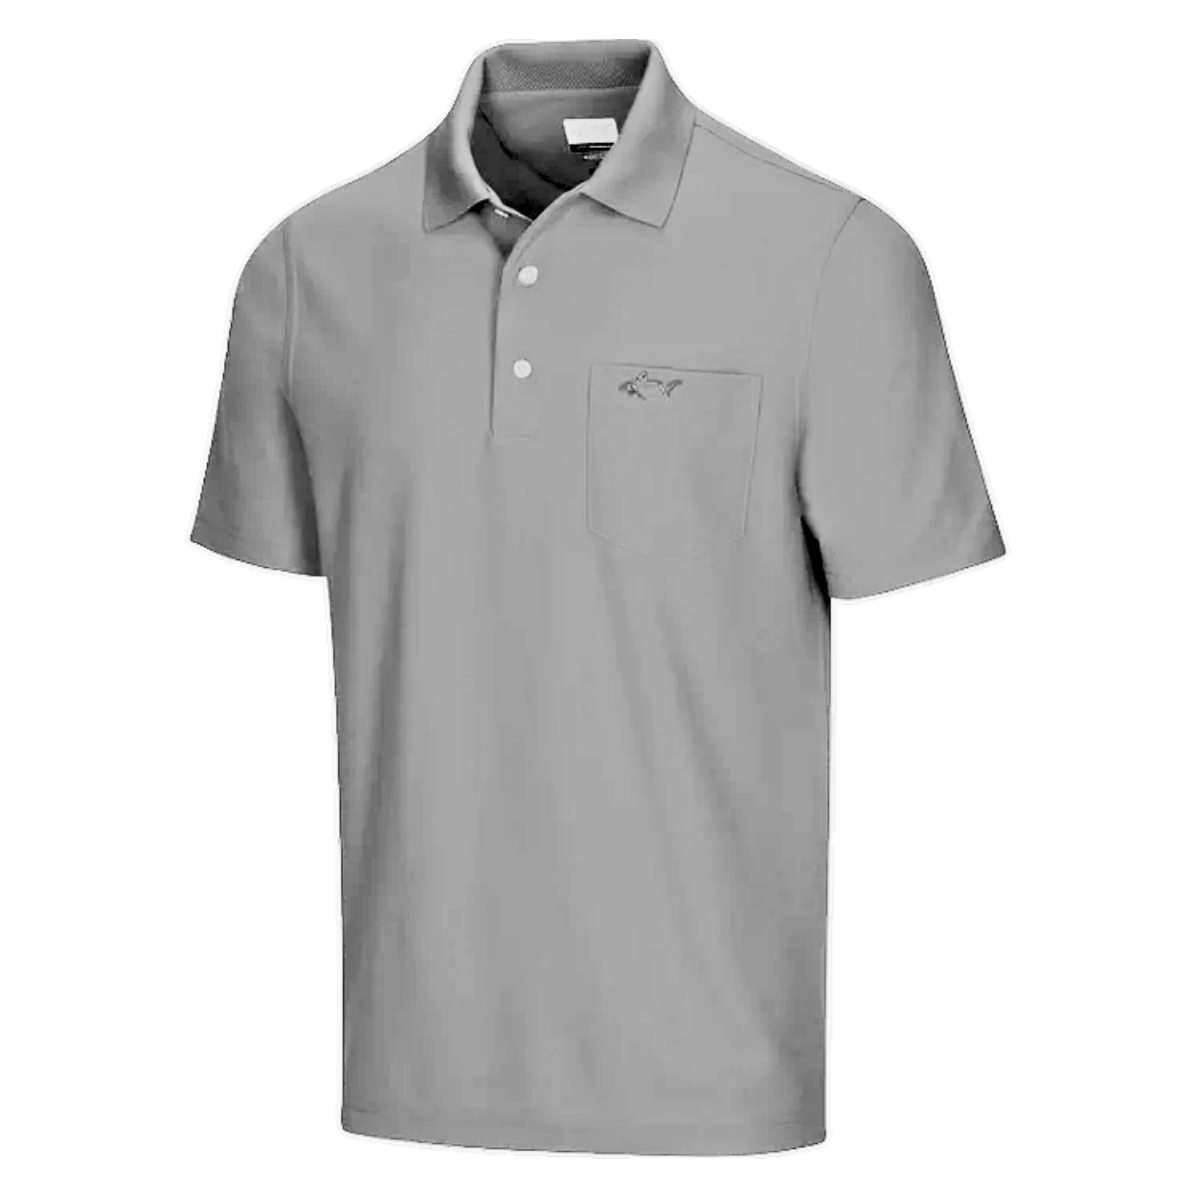 Greg Norman Protek Micro Pique Pocket Polo T-Shirt (US Size)